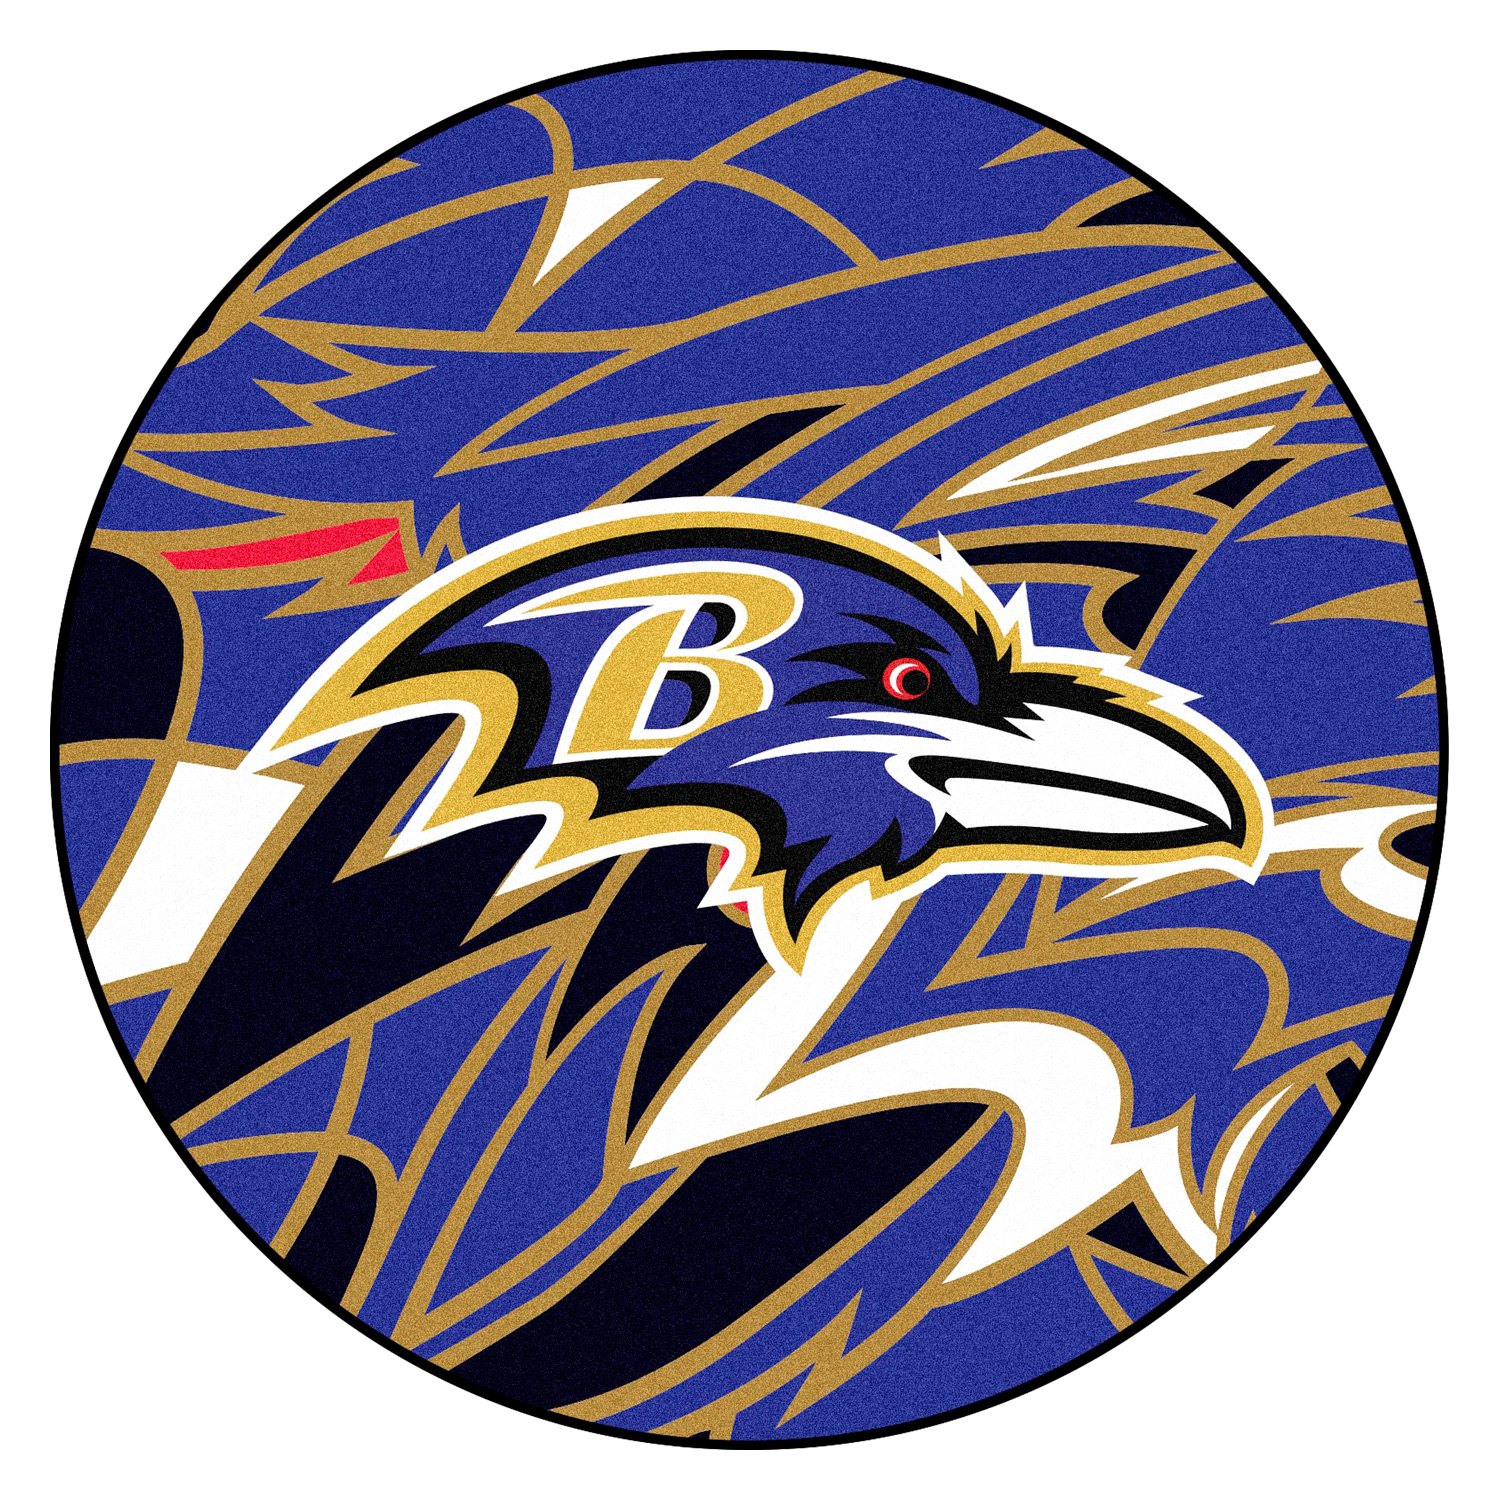 FanMats® 23207 "XFIT" NFL Baltimore Ravens Round Nylon Area Rug with